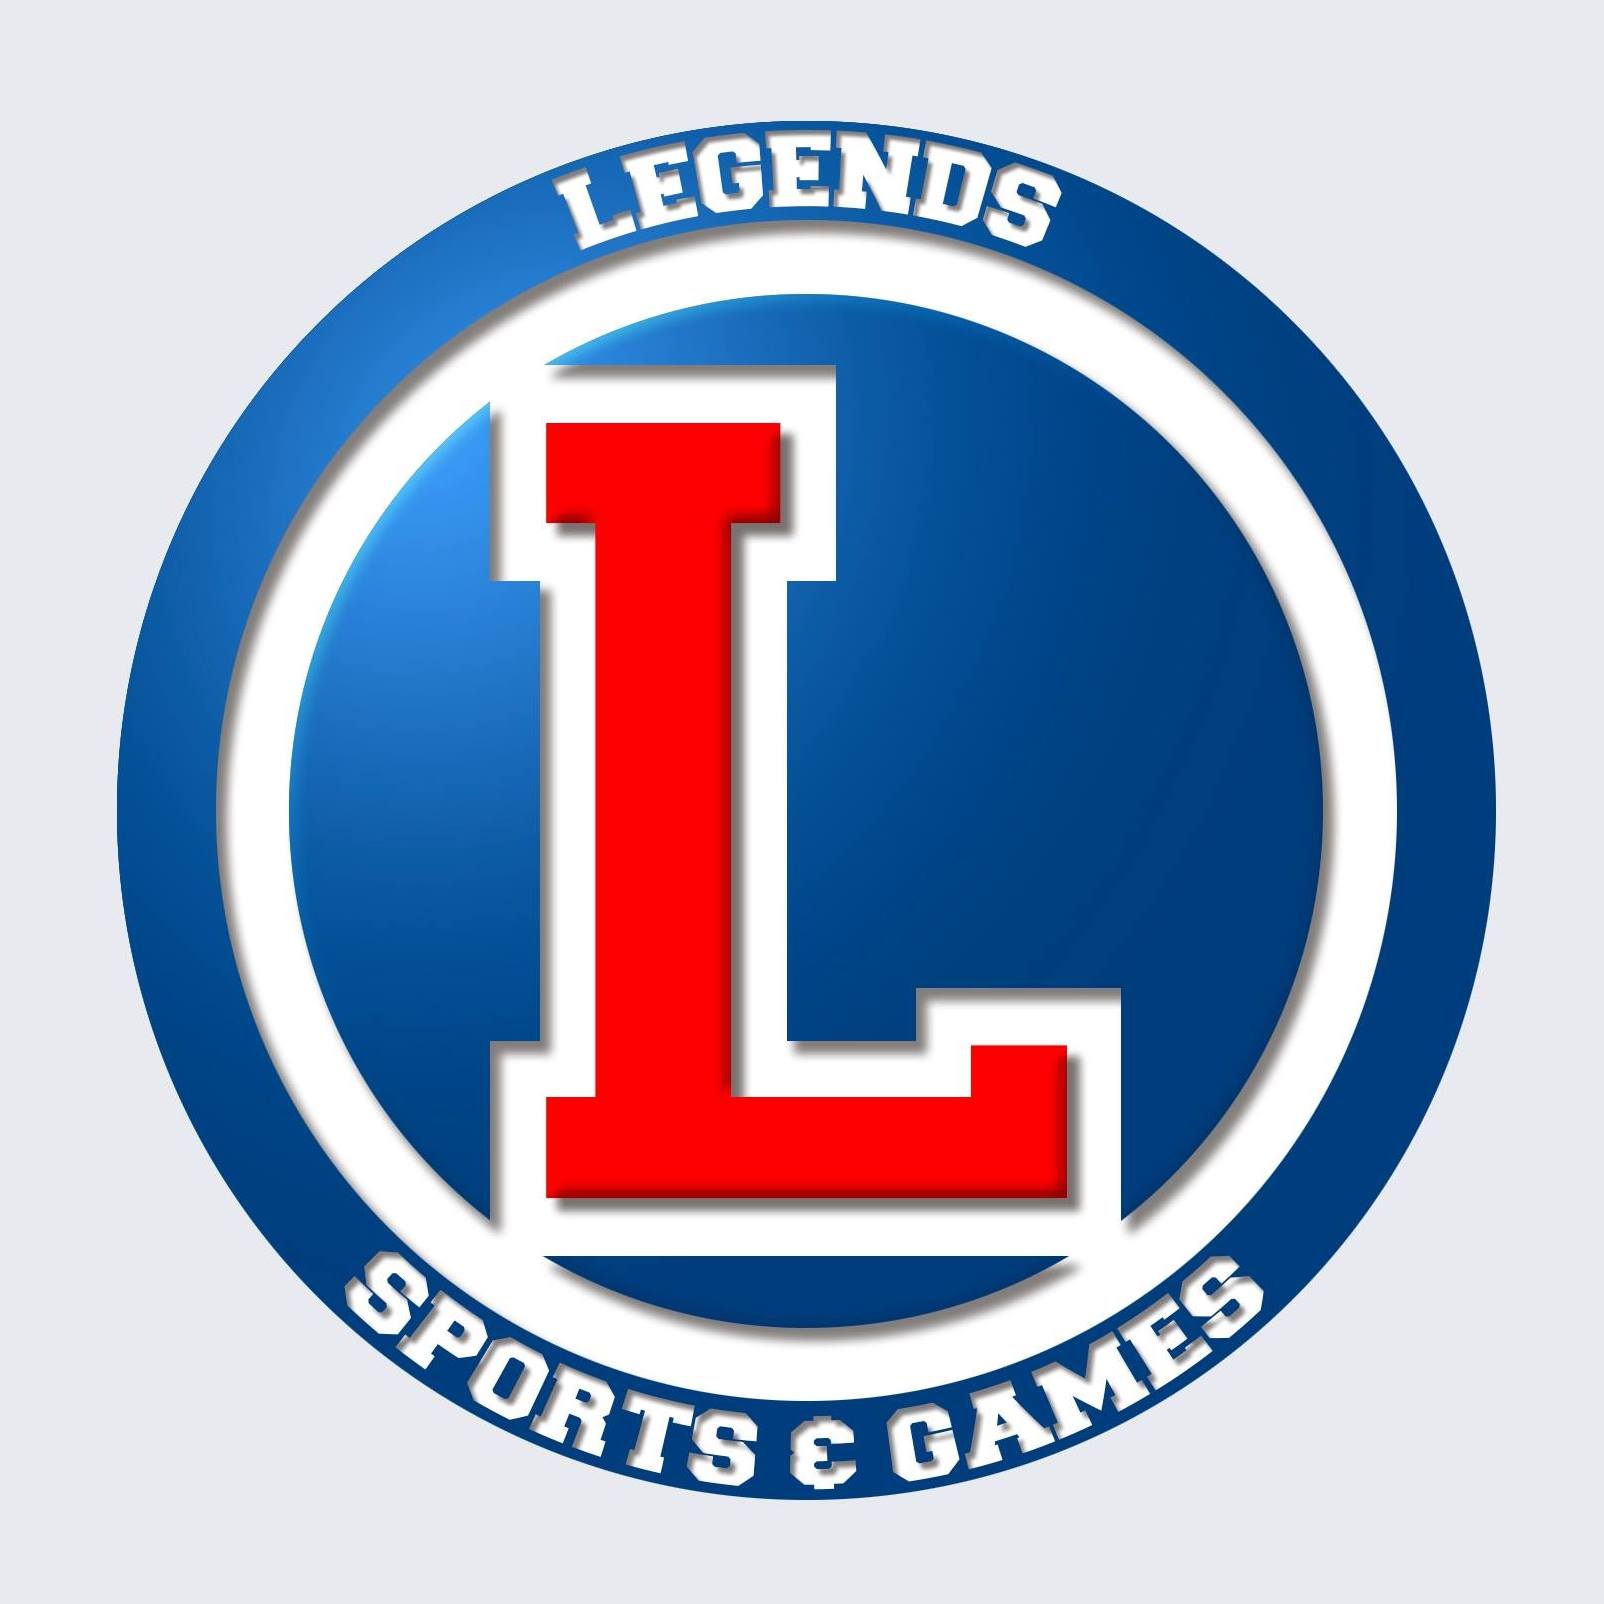 Legends Sports & Games